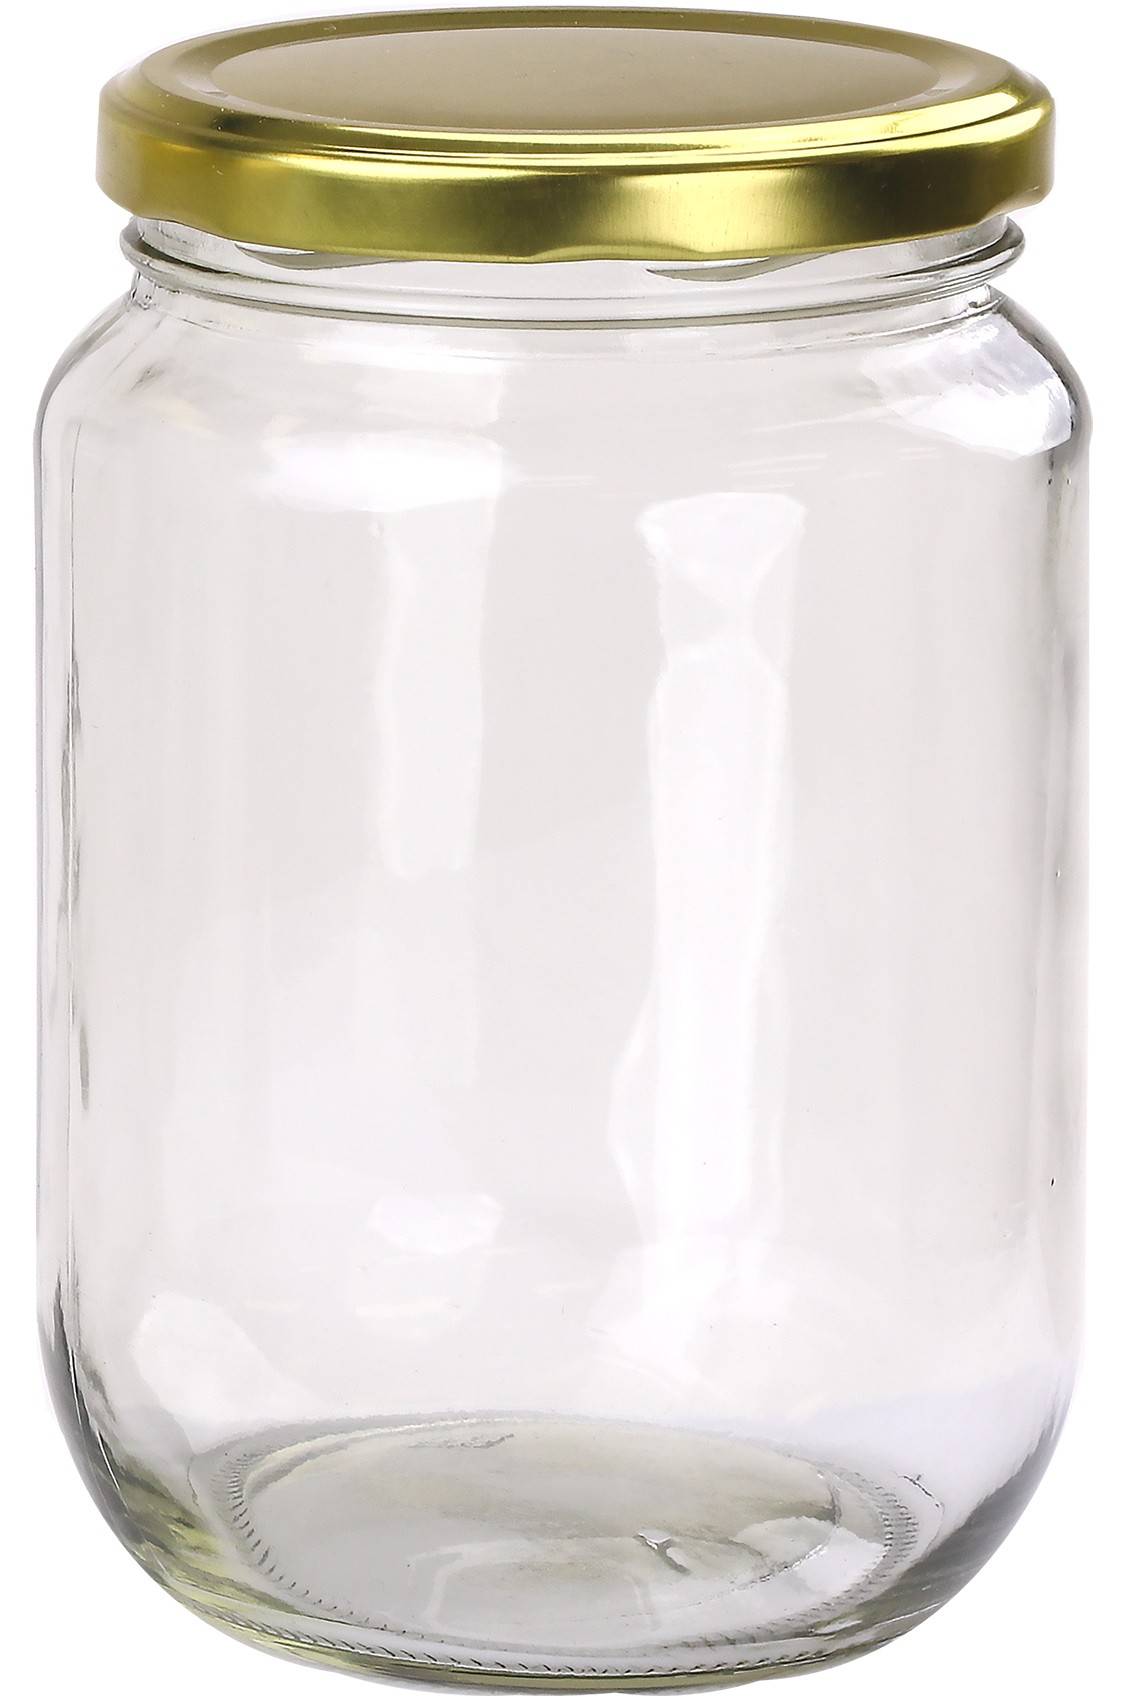 Download Carton 18 pcs Honey Jars - 500gm size - Hexagonal Glass ...